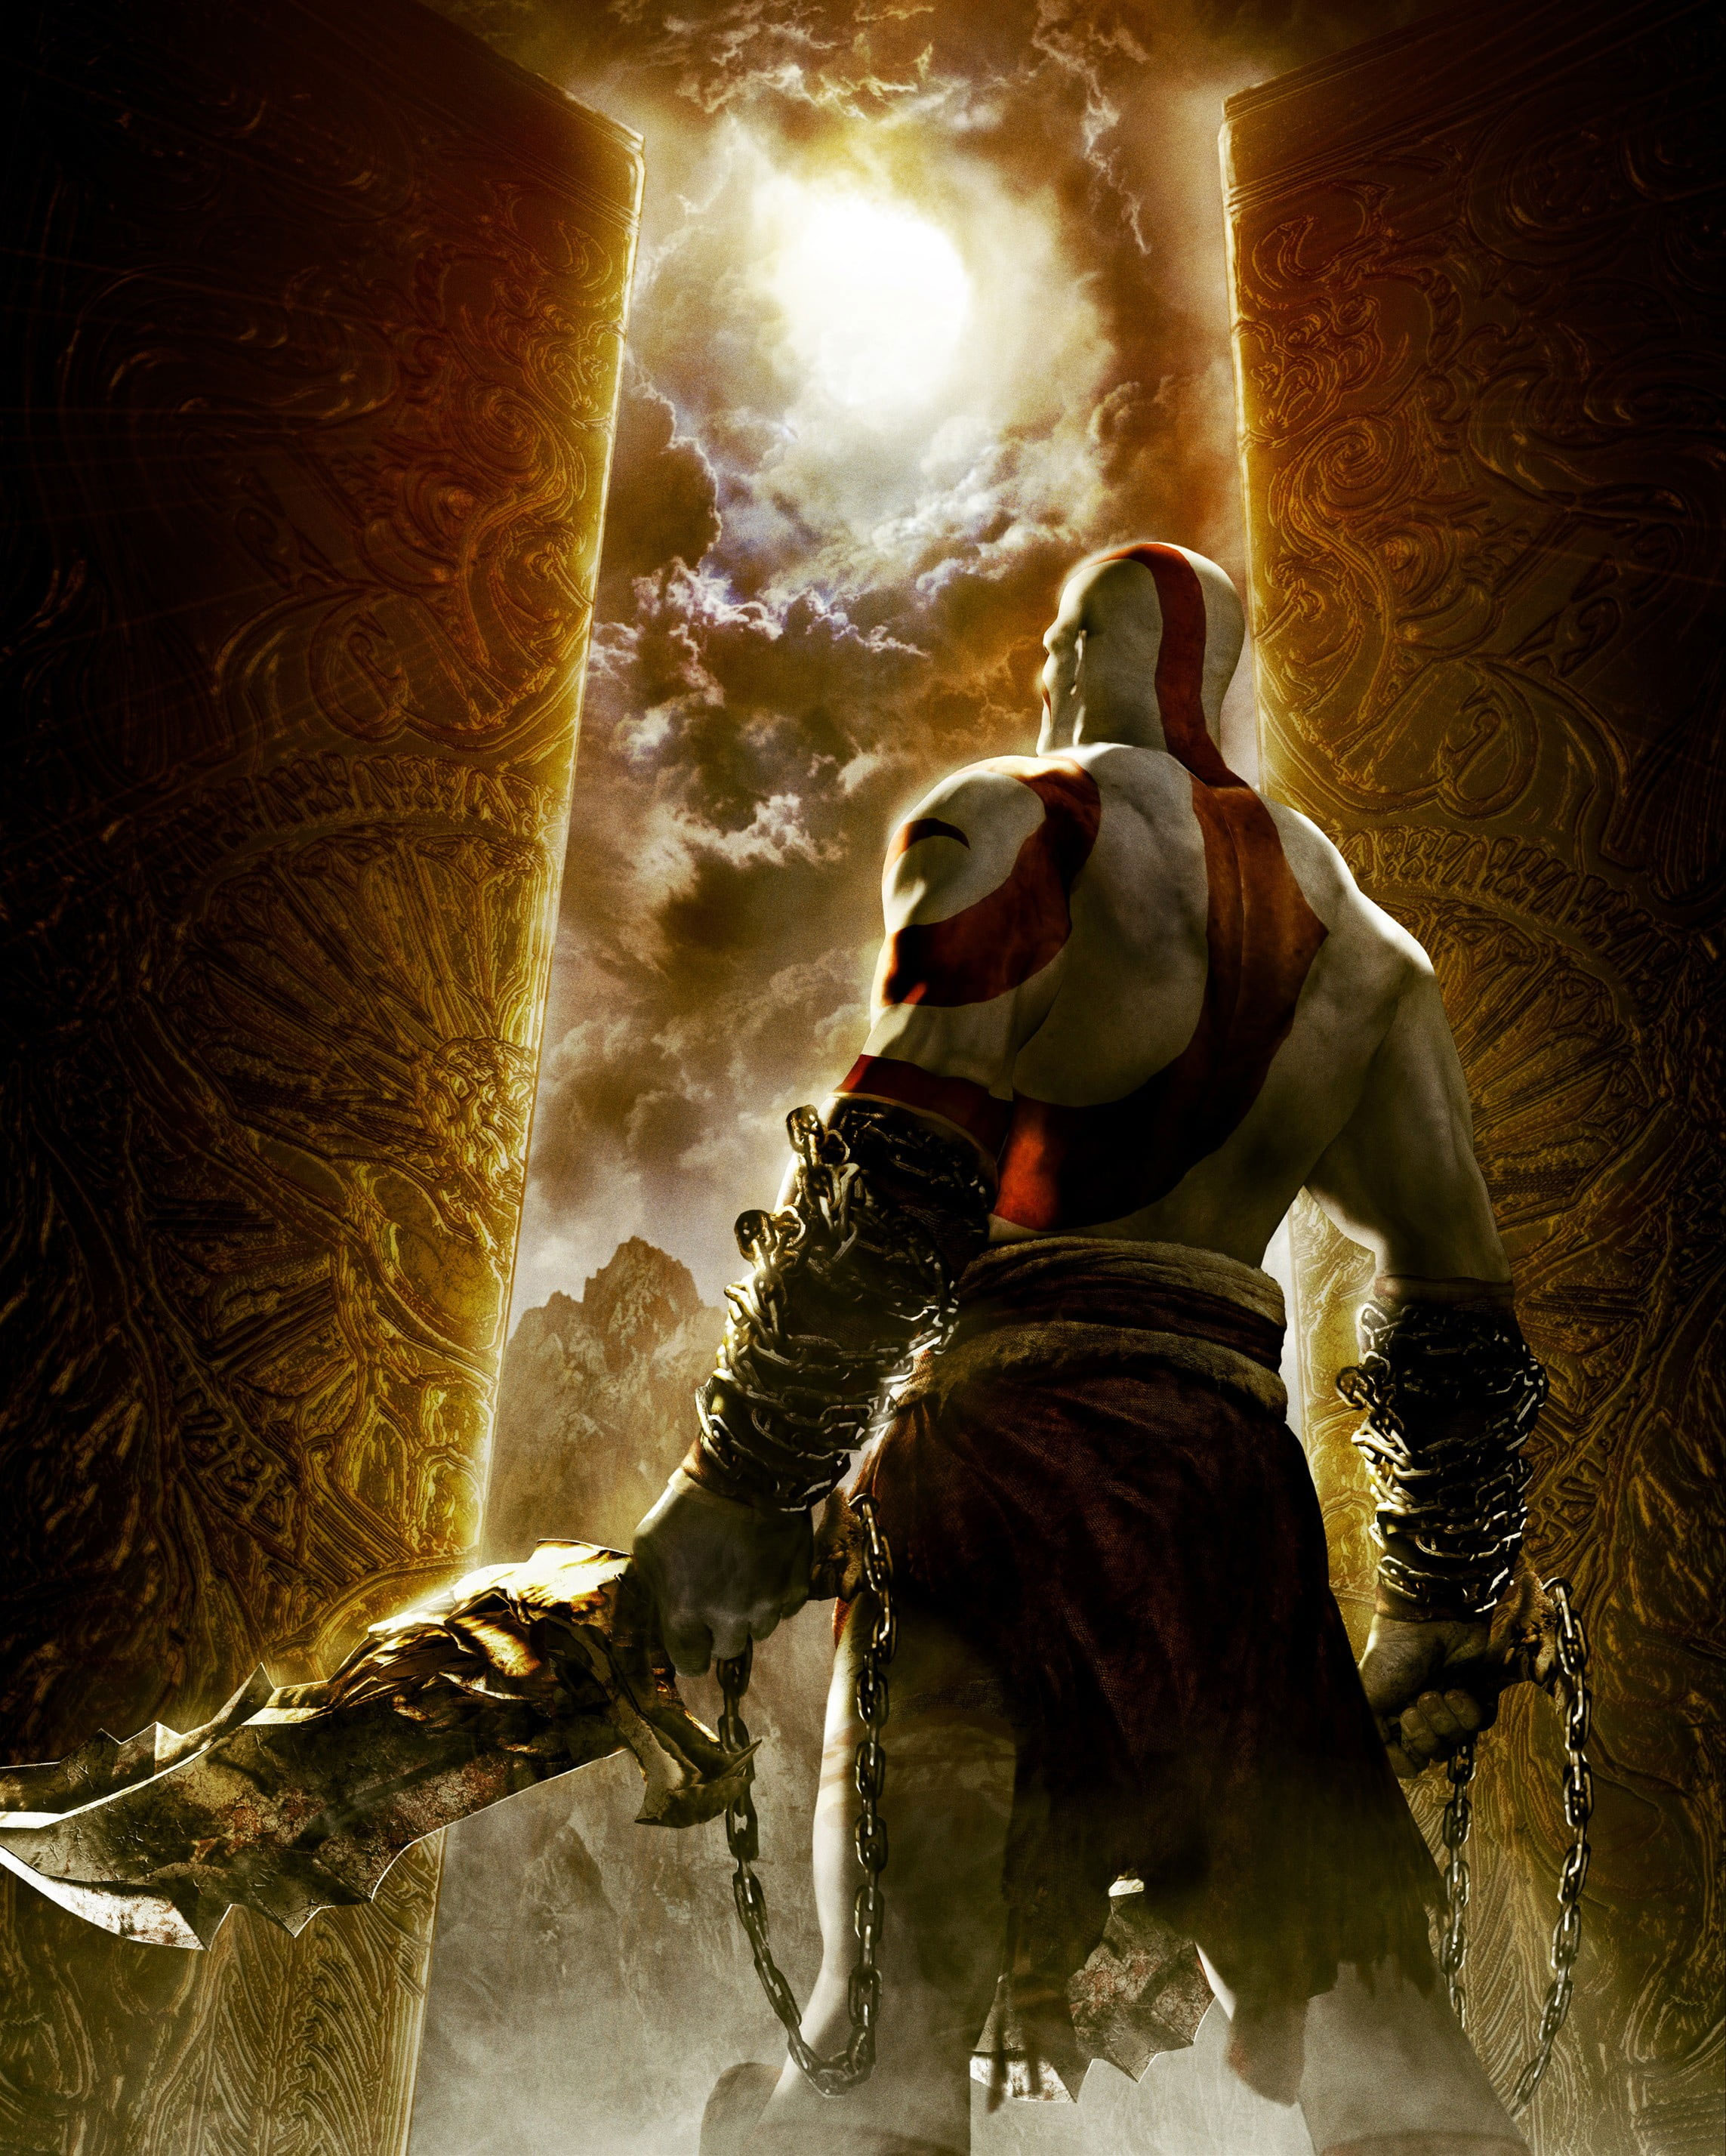 RHGFX on X God of War  Kratos  Wallpaper fanart GODOFWAR  PS4Exclusive httpstcosPmiz3vXxR  X